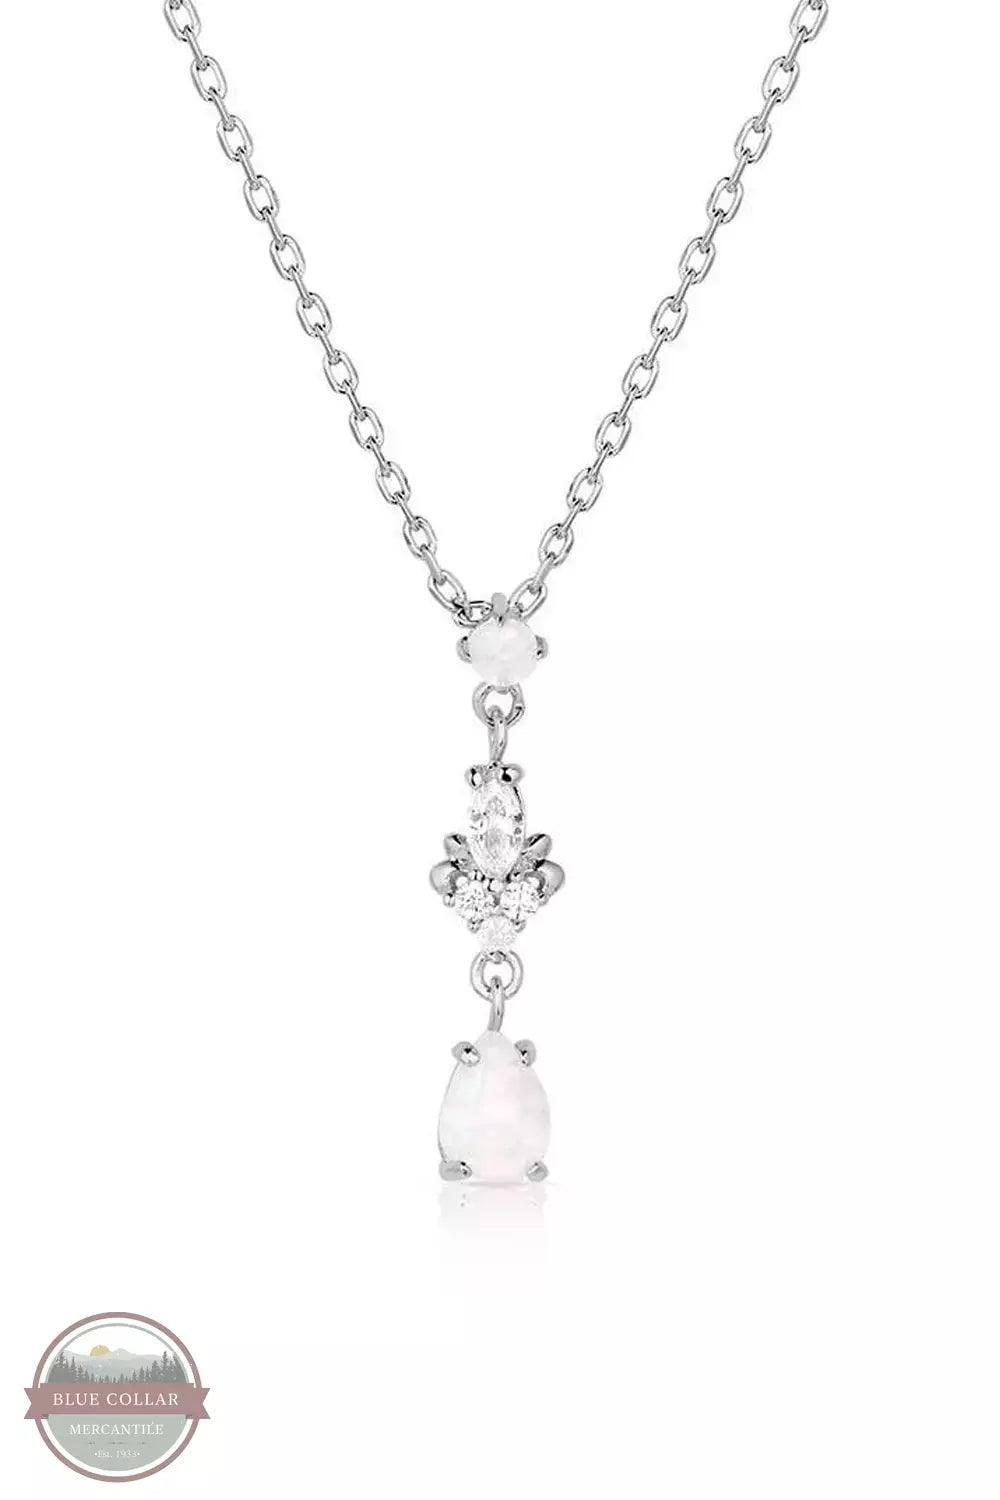 Montana Silversmiths NC5772 Elegant Harmony White Opal Necklace Front View